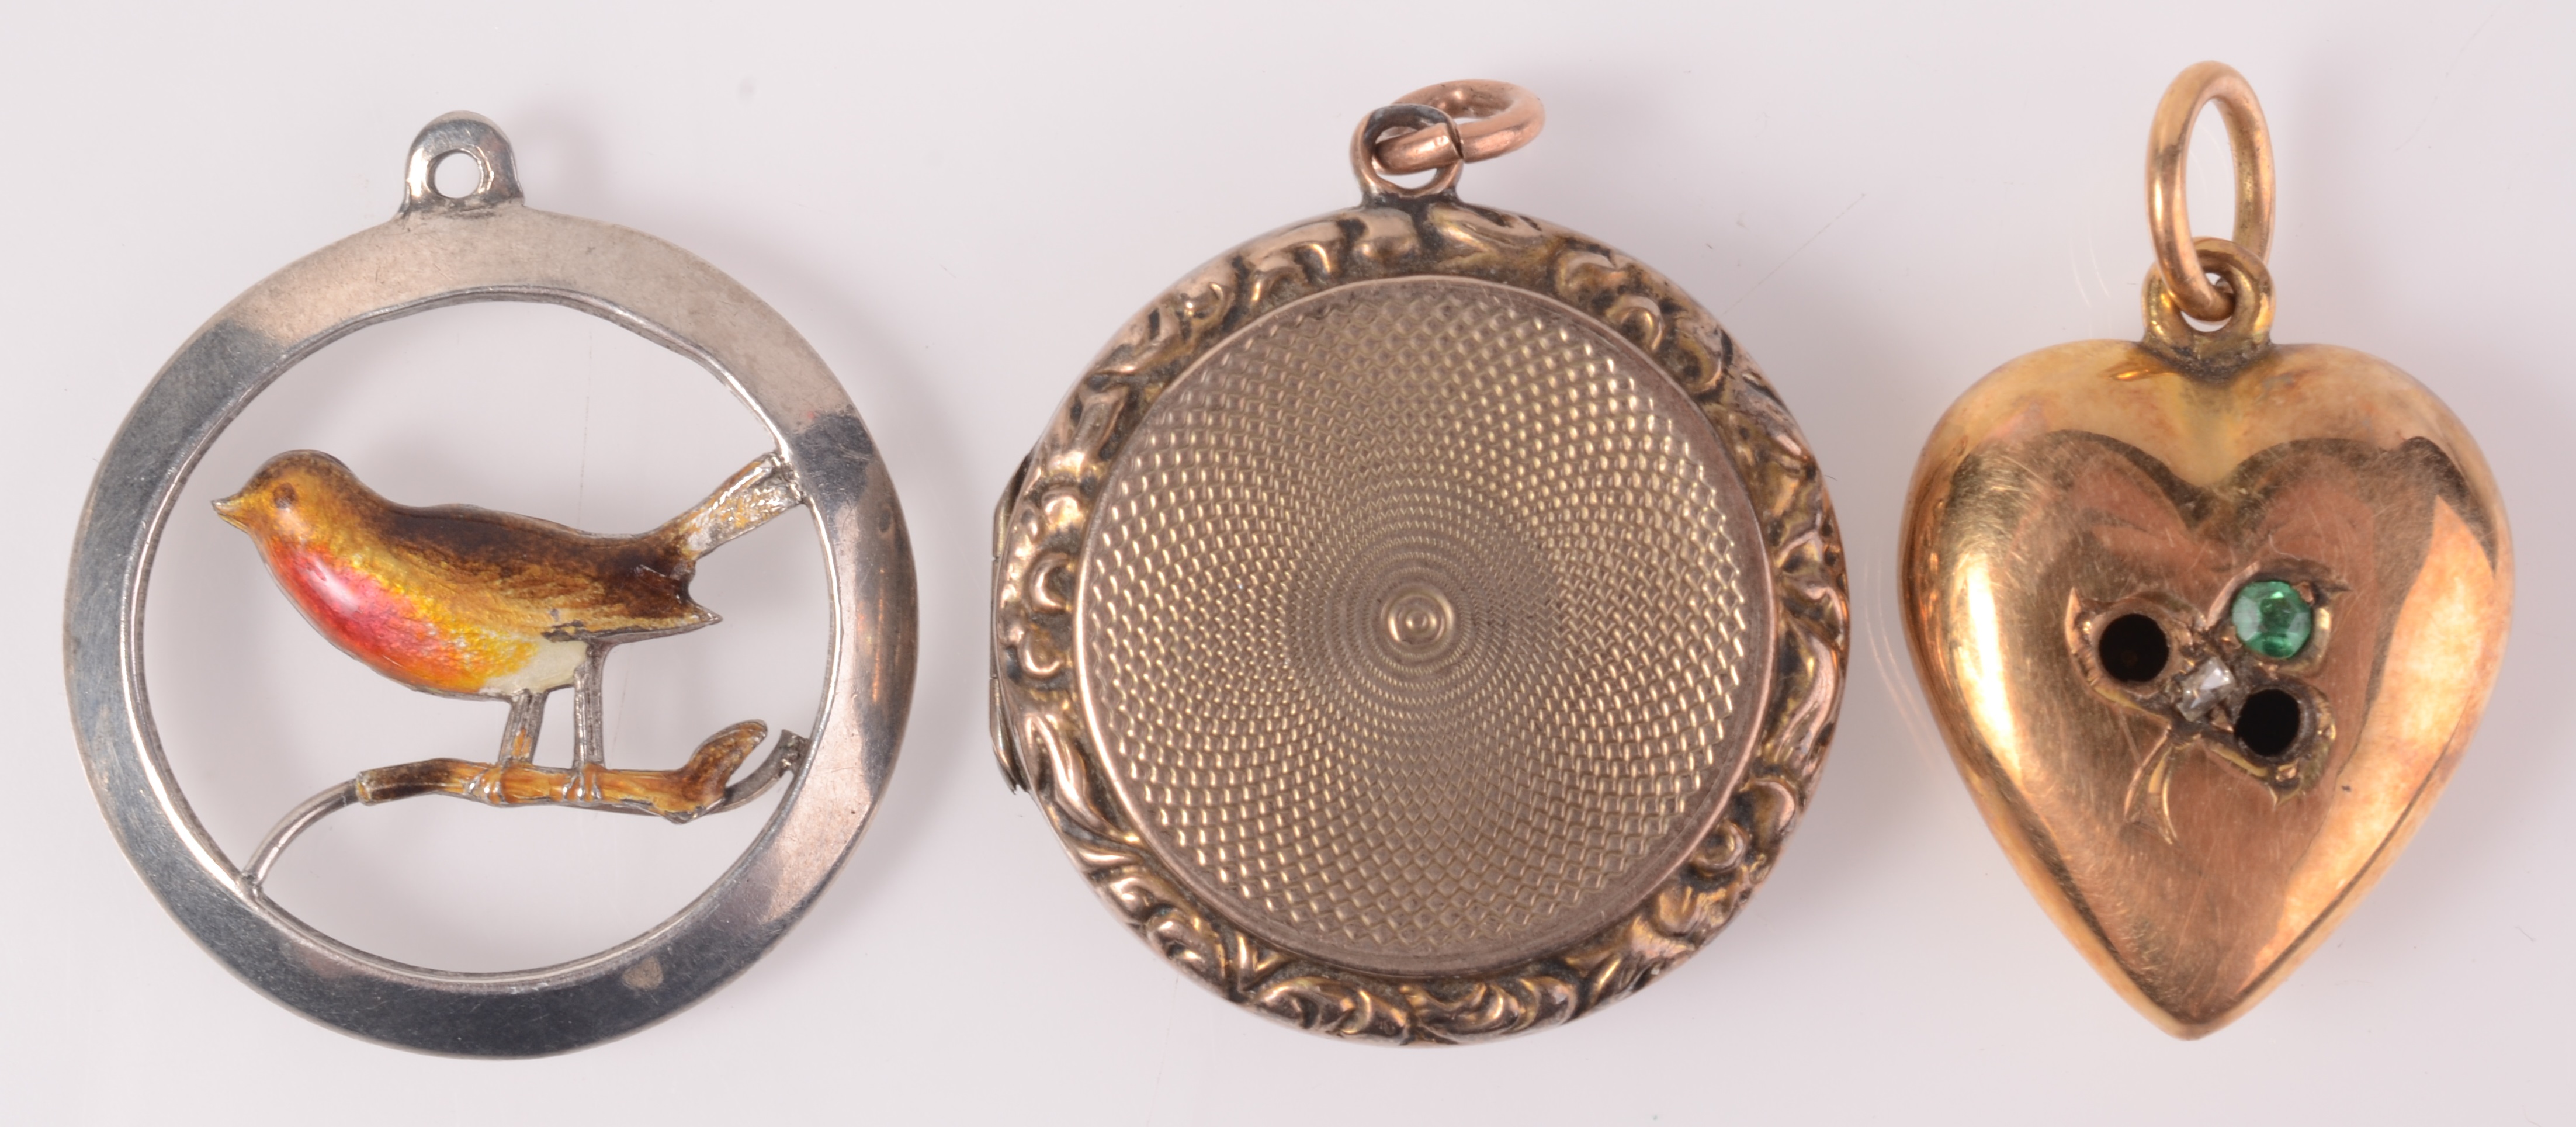 An enamelled silver pendant, a gilt locket and a 15ct gold heart pendant (lacks stones).